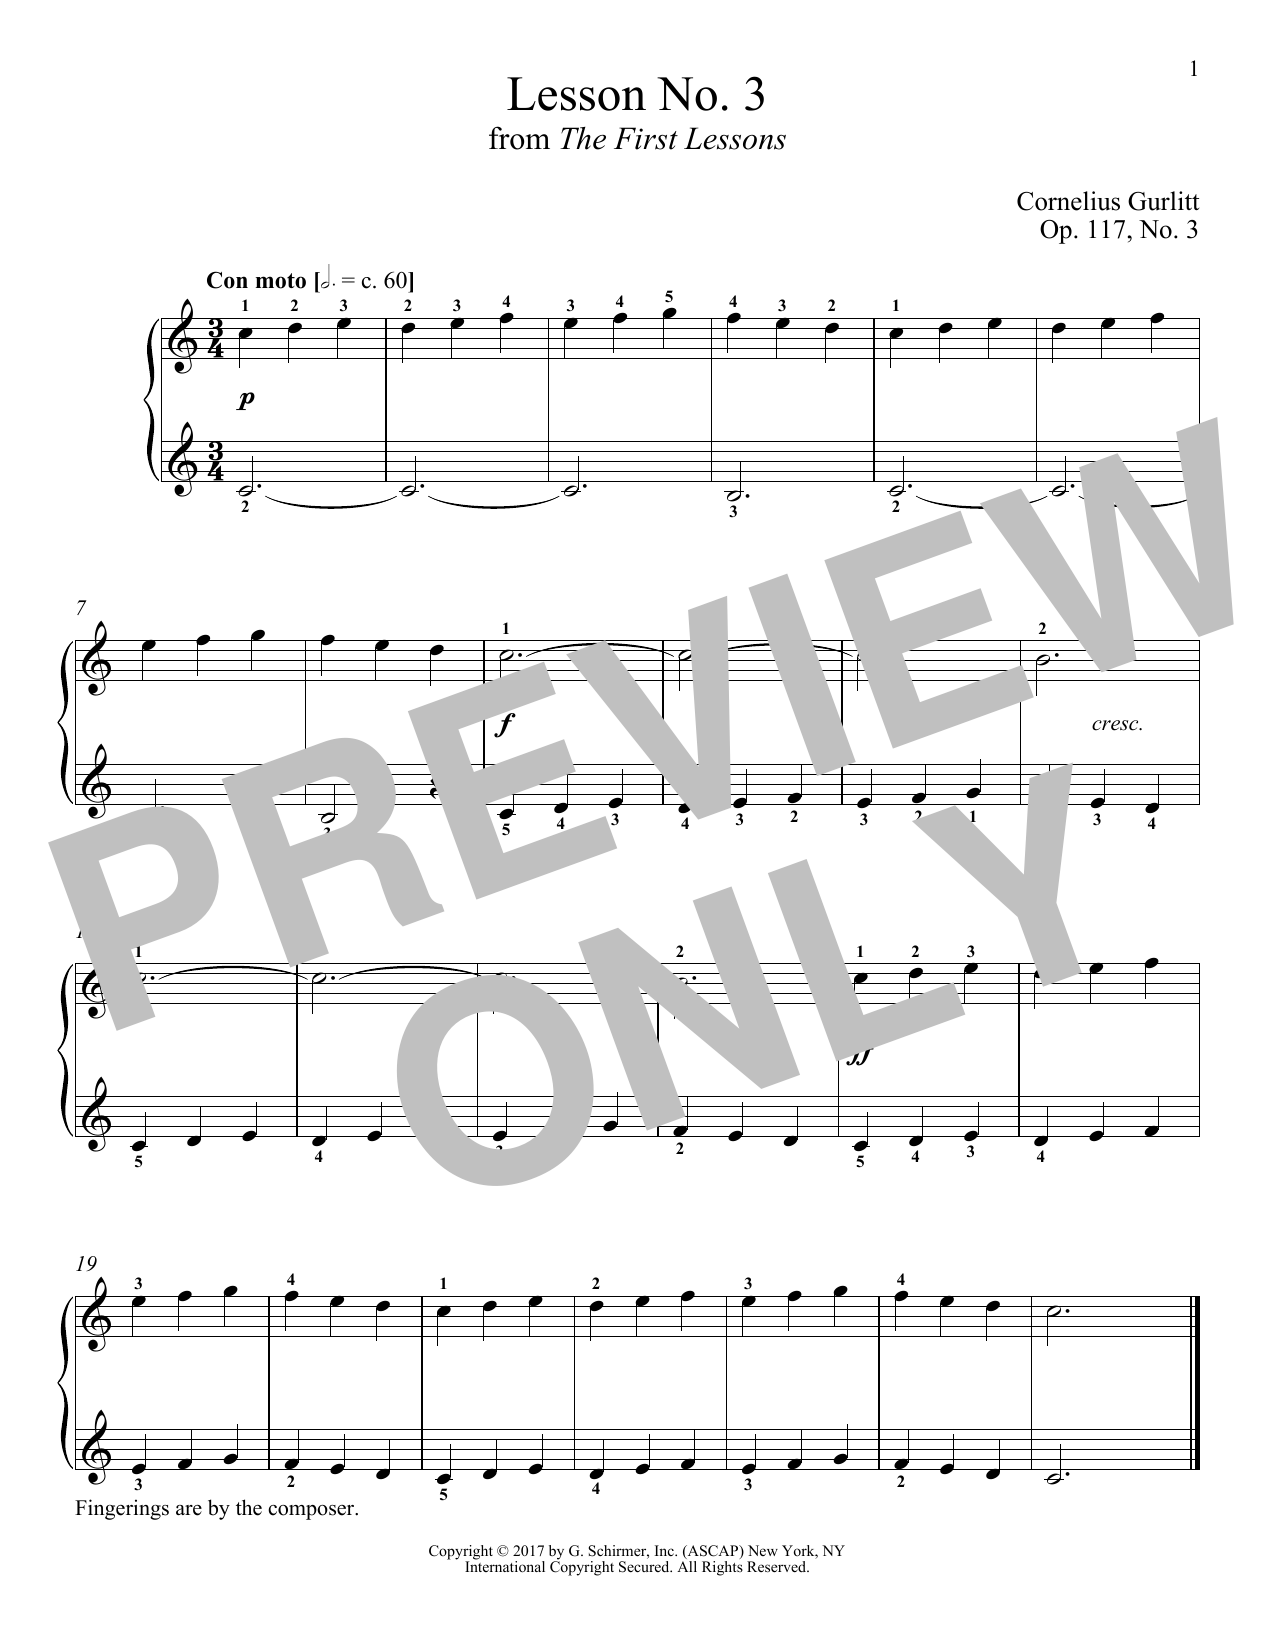 Cornelius Gurlitt Con moto, Op. 117, No. 3 Sheet Music Notes & Chords for Piano - Download or Print PDF